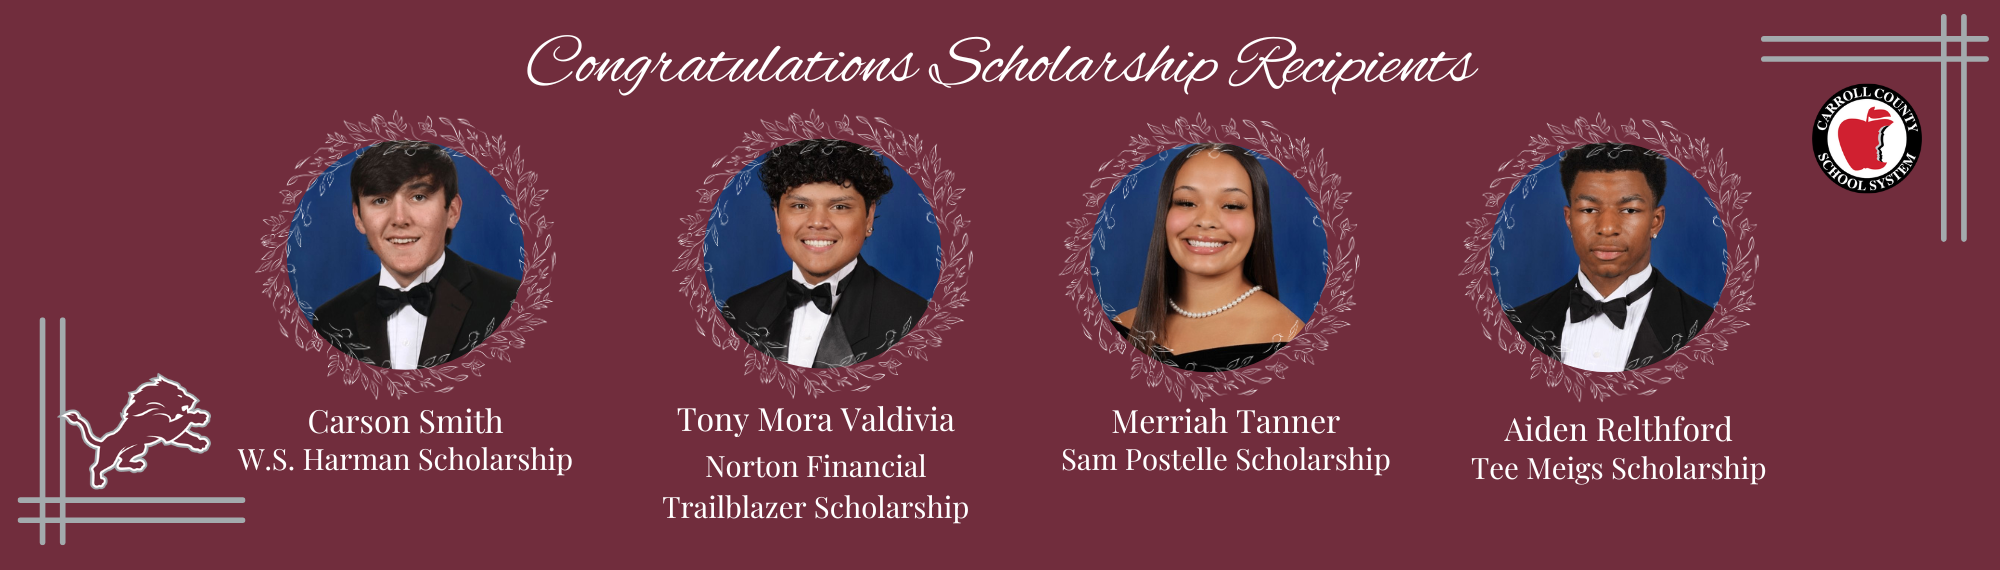 Scholarship recipients